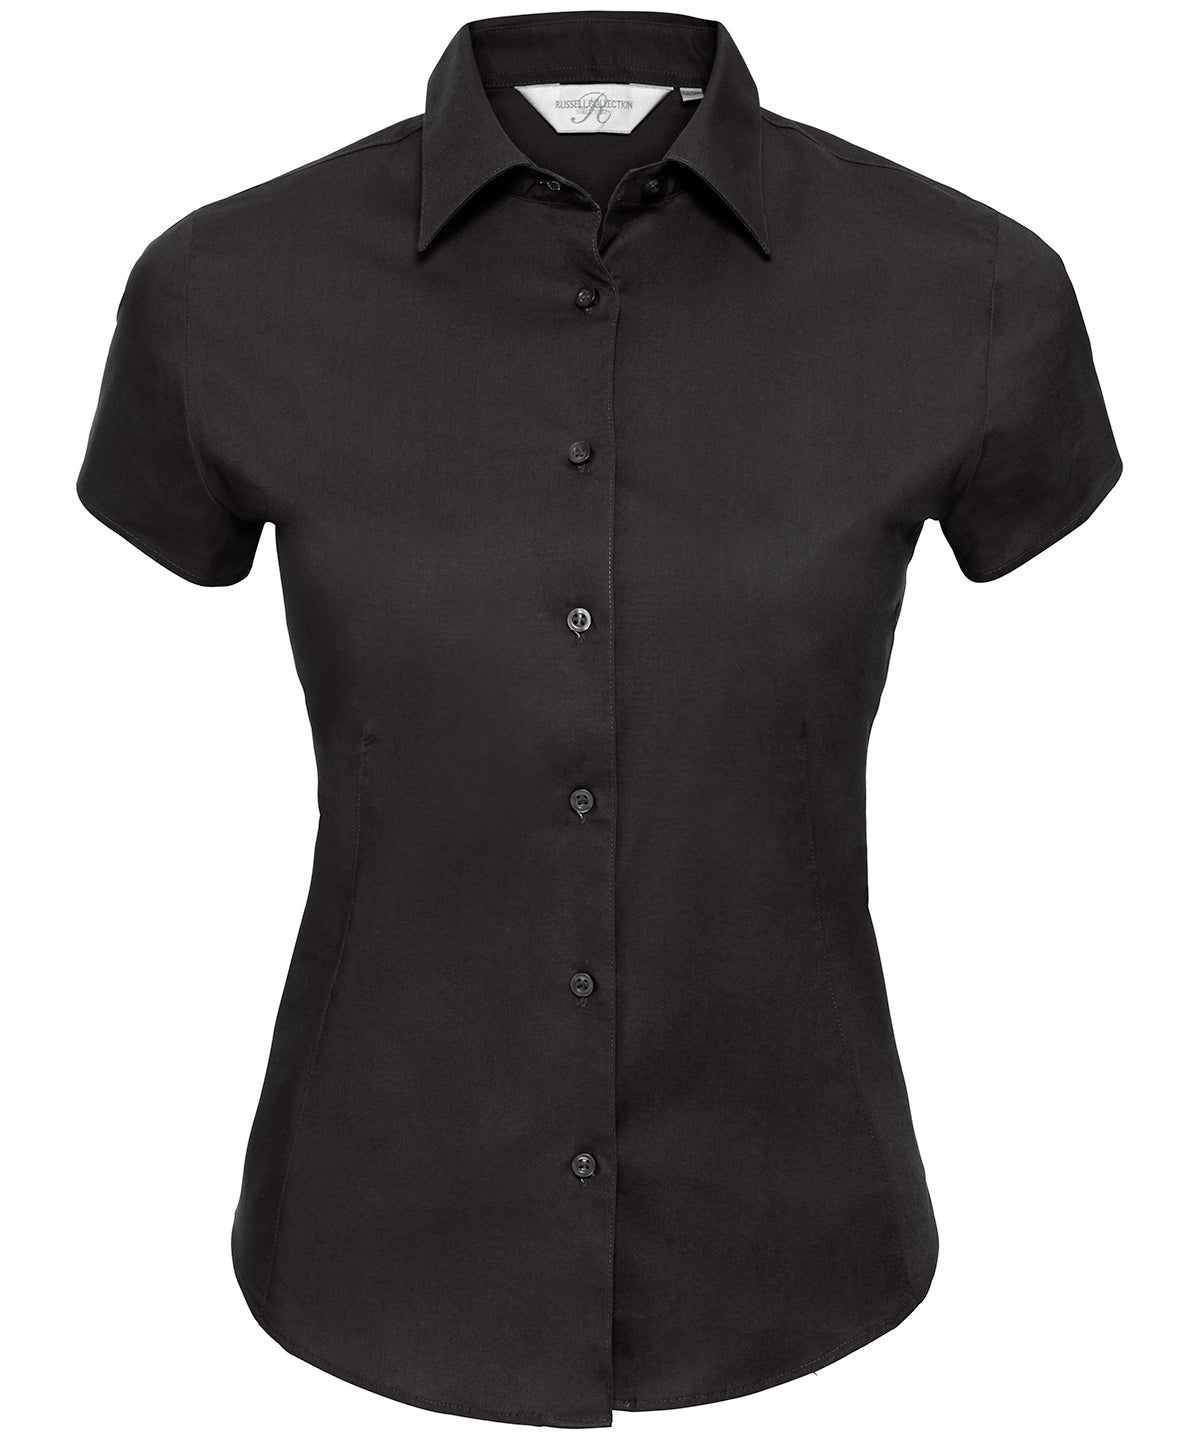 Bolir - Women's Short Sleeve Easycare Fitted Stretch Shirt